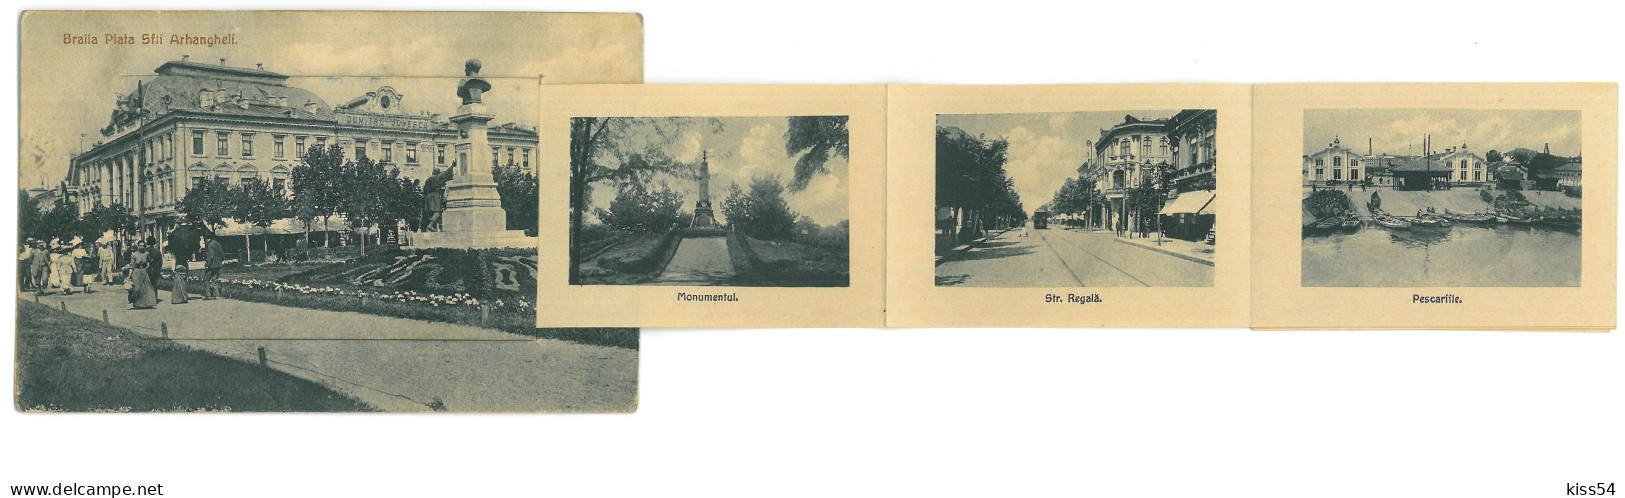 RO 83 - 22758 BRAILA, Leporello, Park, Traian Statue, Romania - Old Postcard +10 Mini Photocards - Used - 1913 - Romania